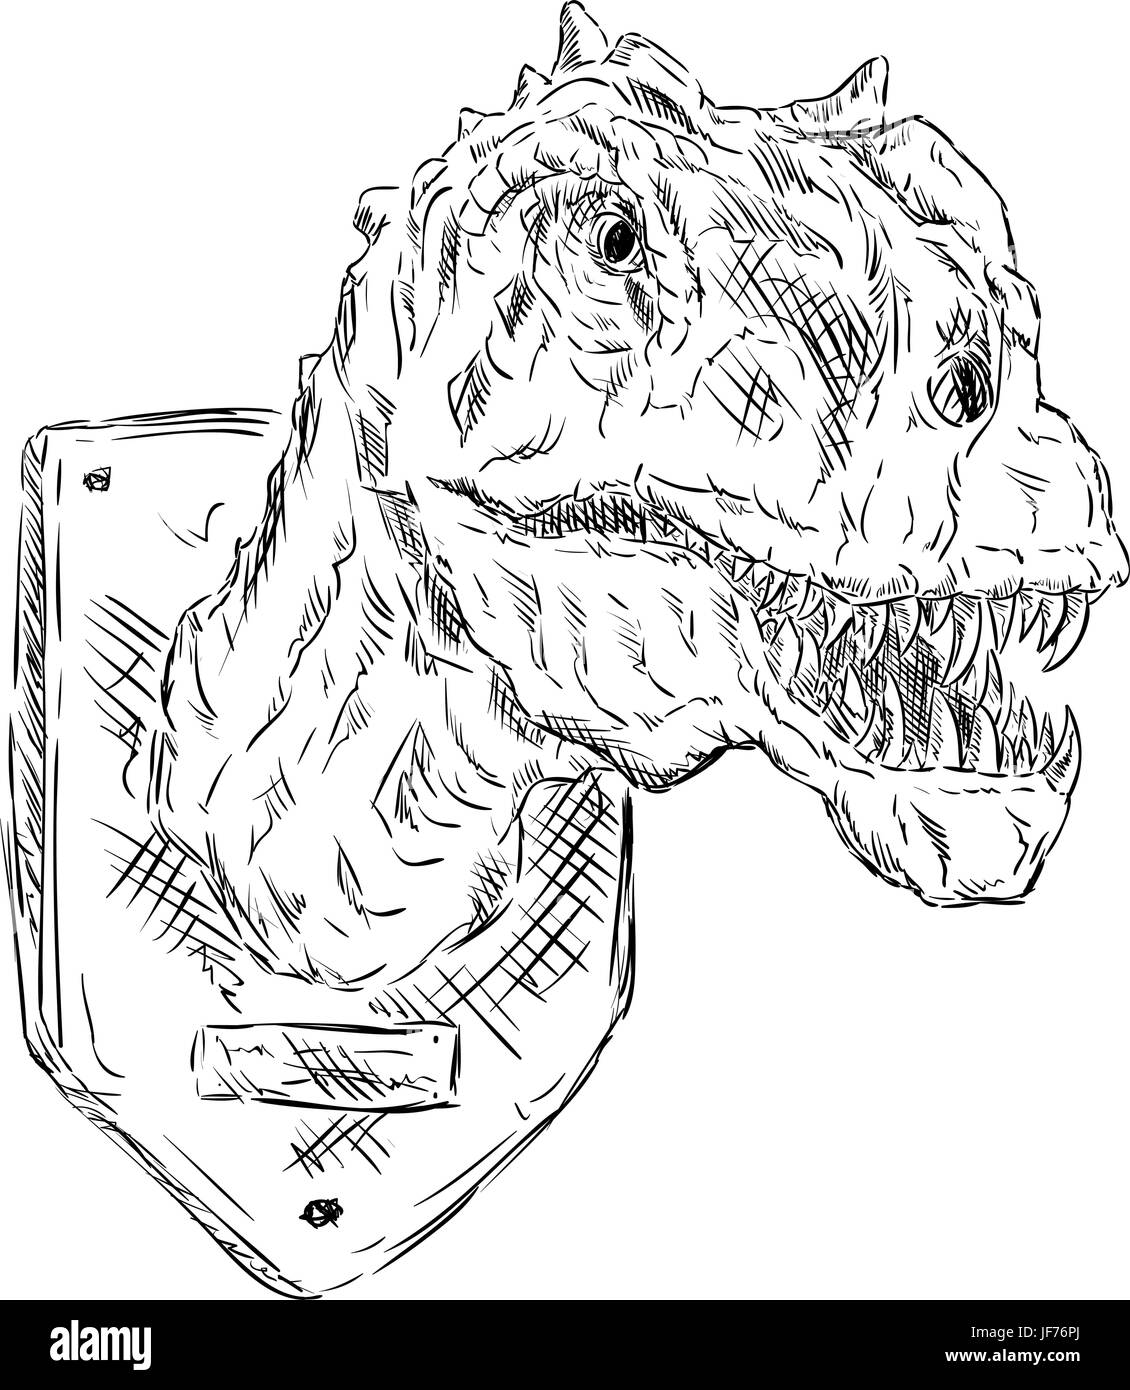 Easy Dinosaur Drawings - HelloArtsy